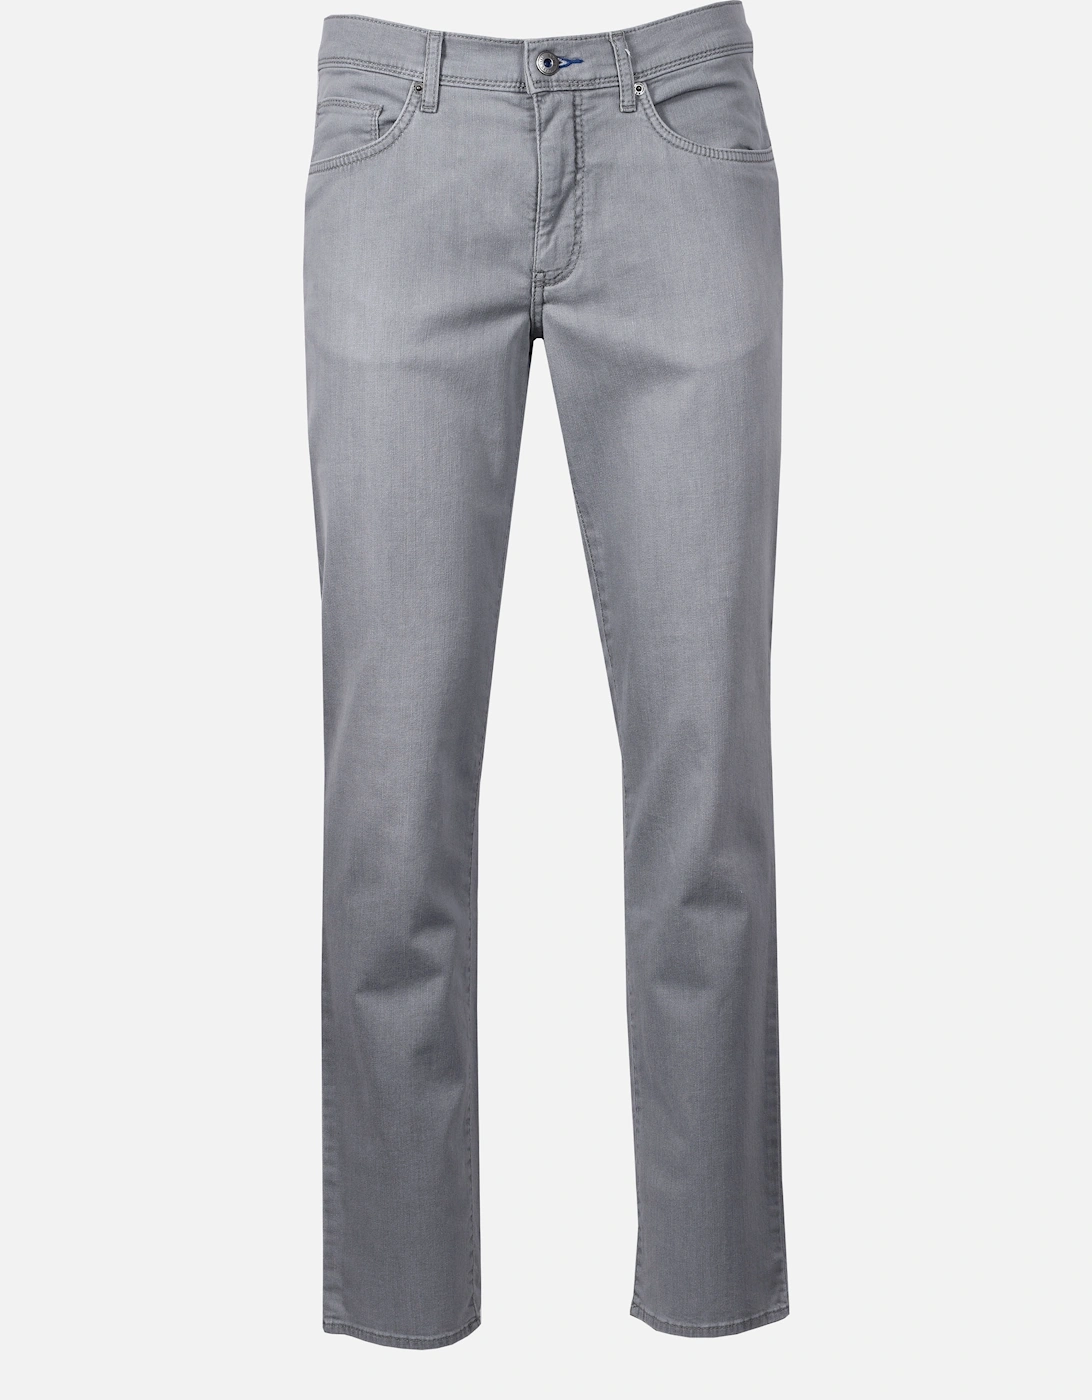 Cadiz Jeans Light Grey